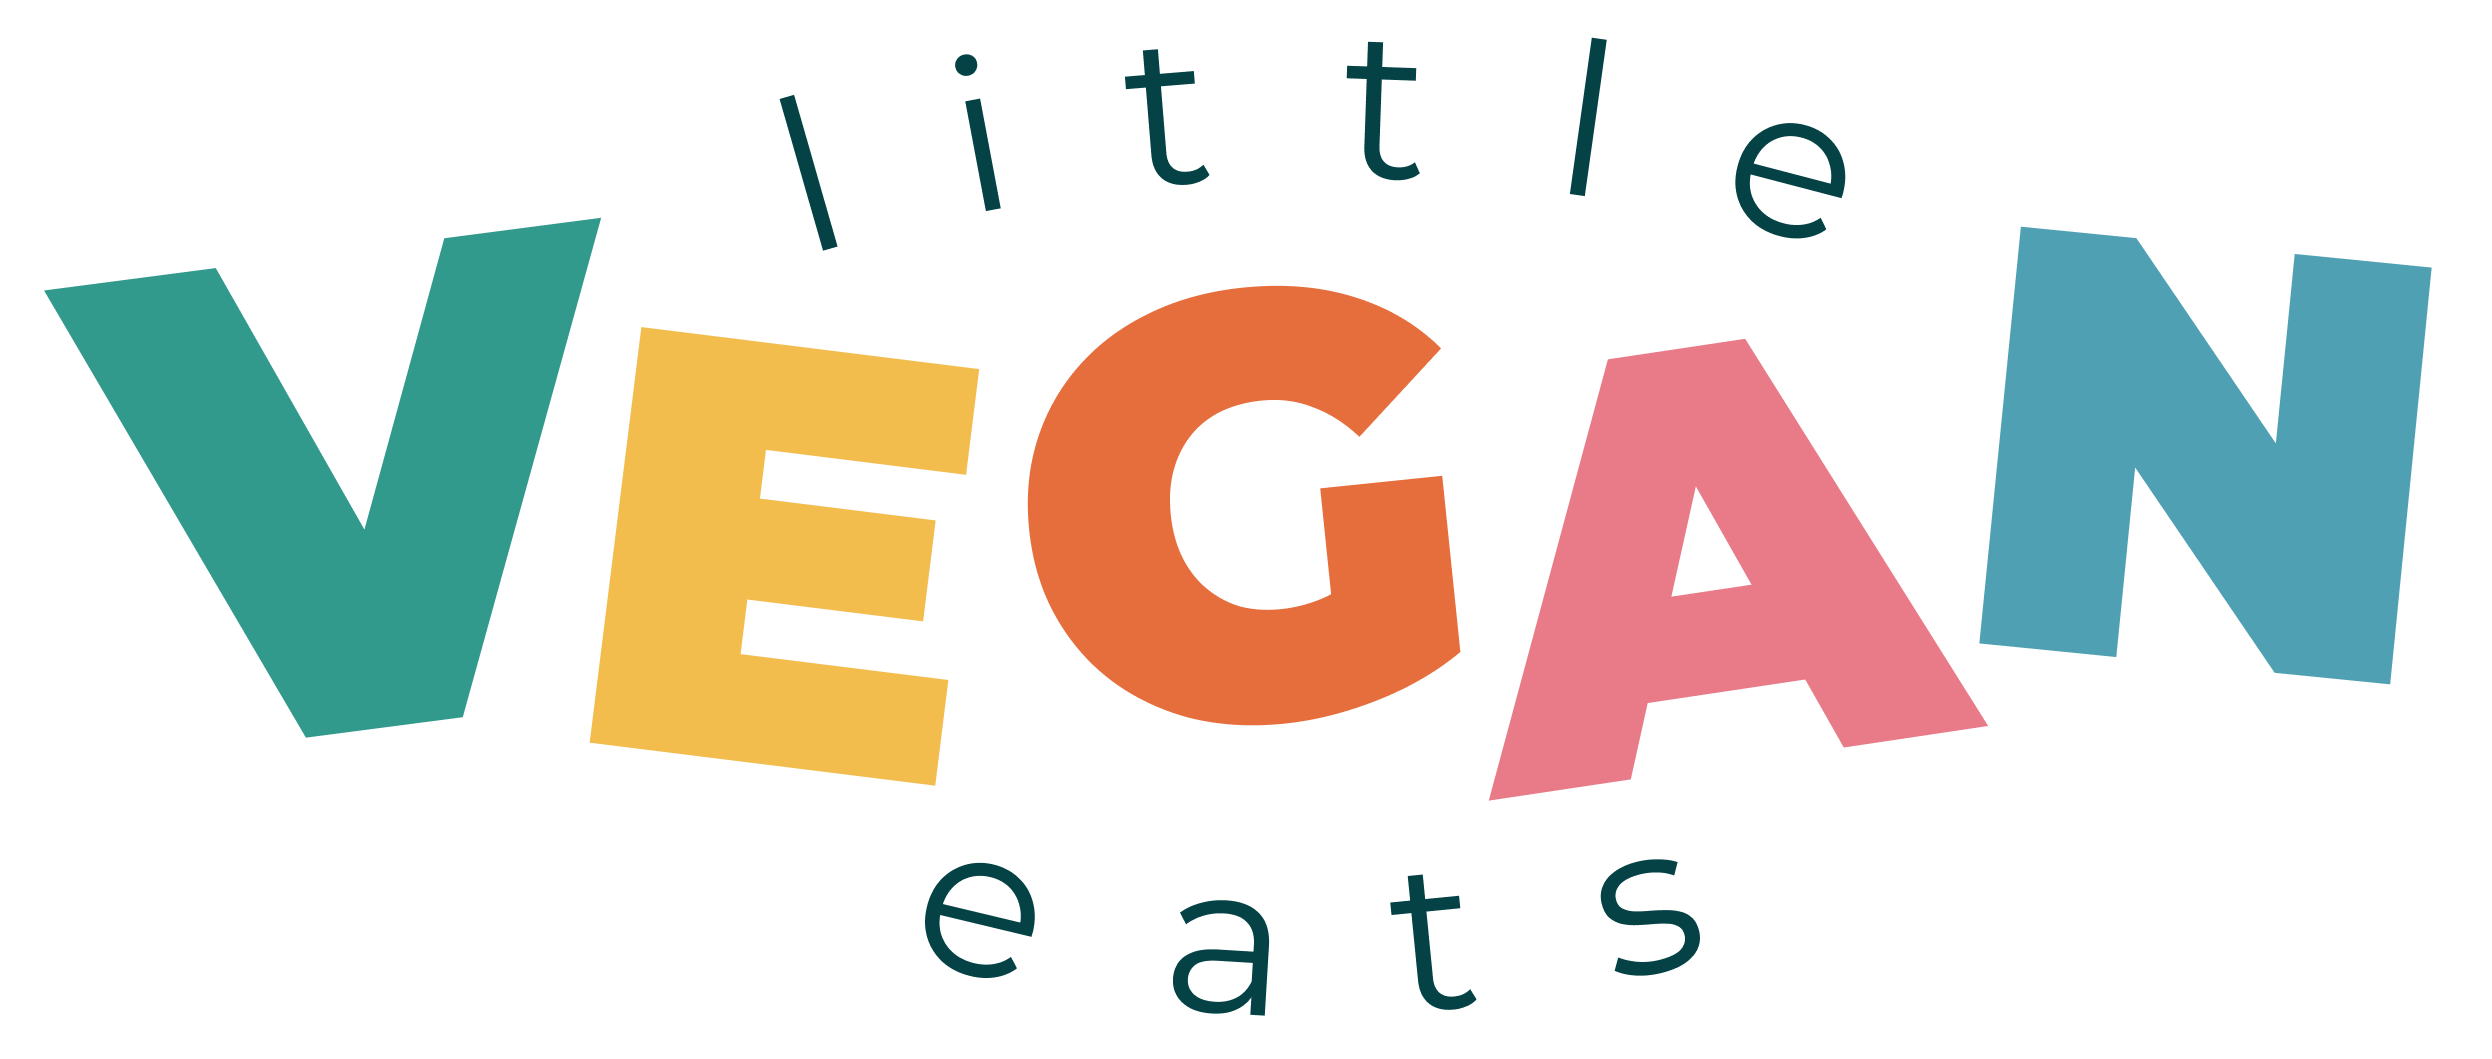 Little Vegan Eats ebook - Little Vegan Eats